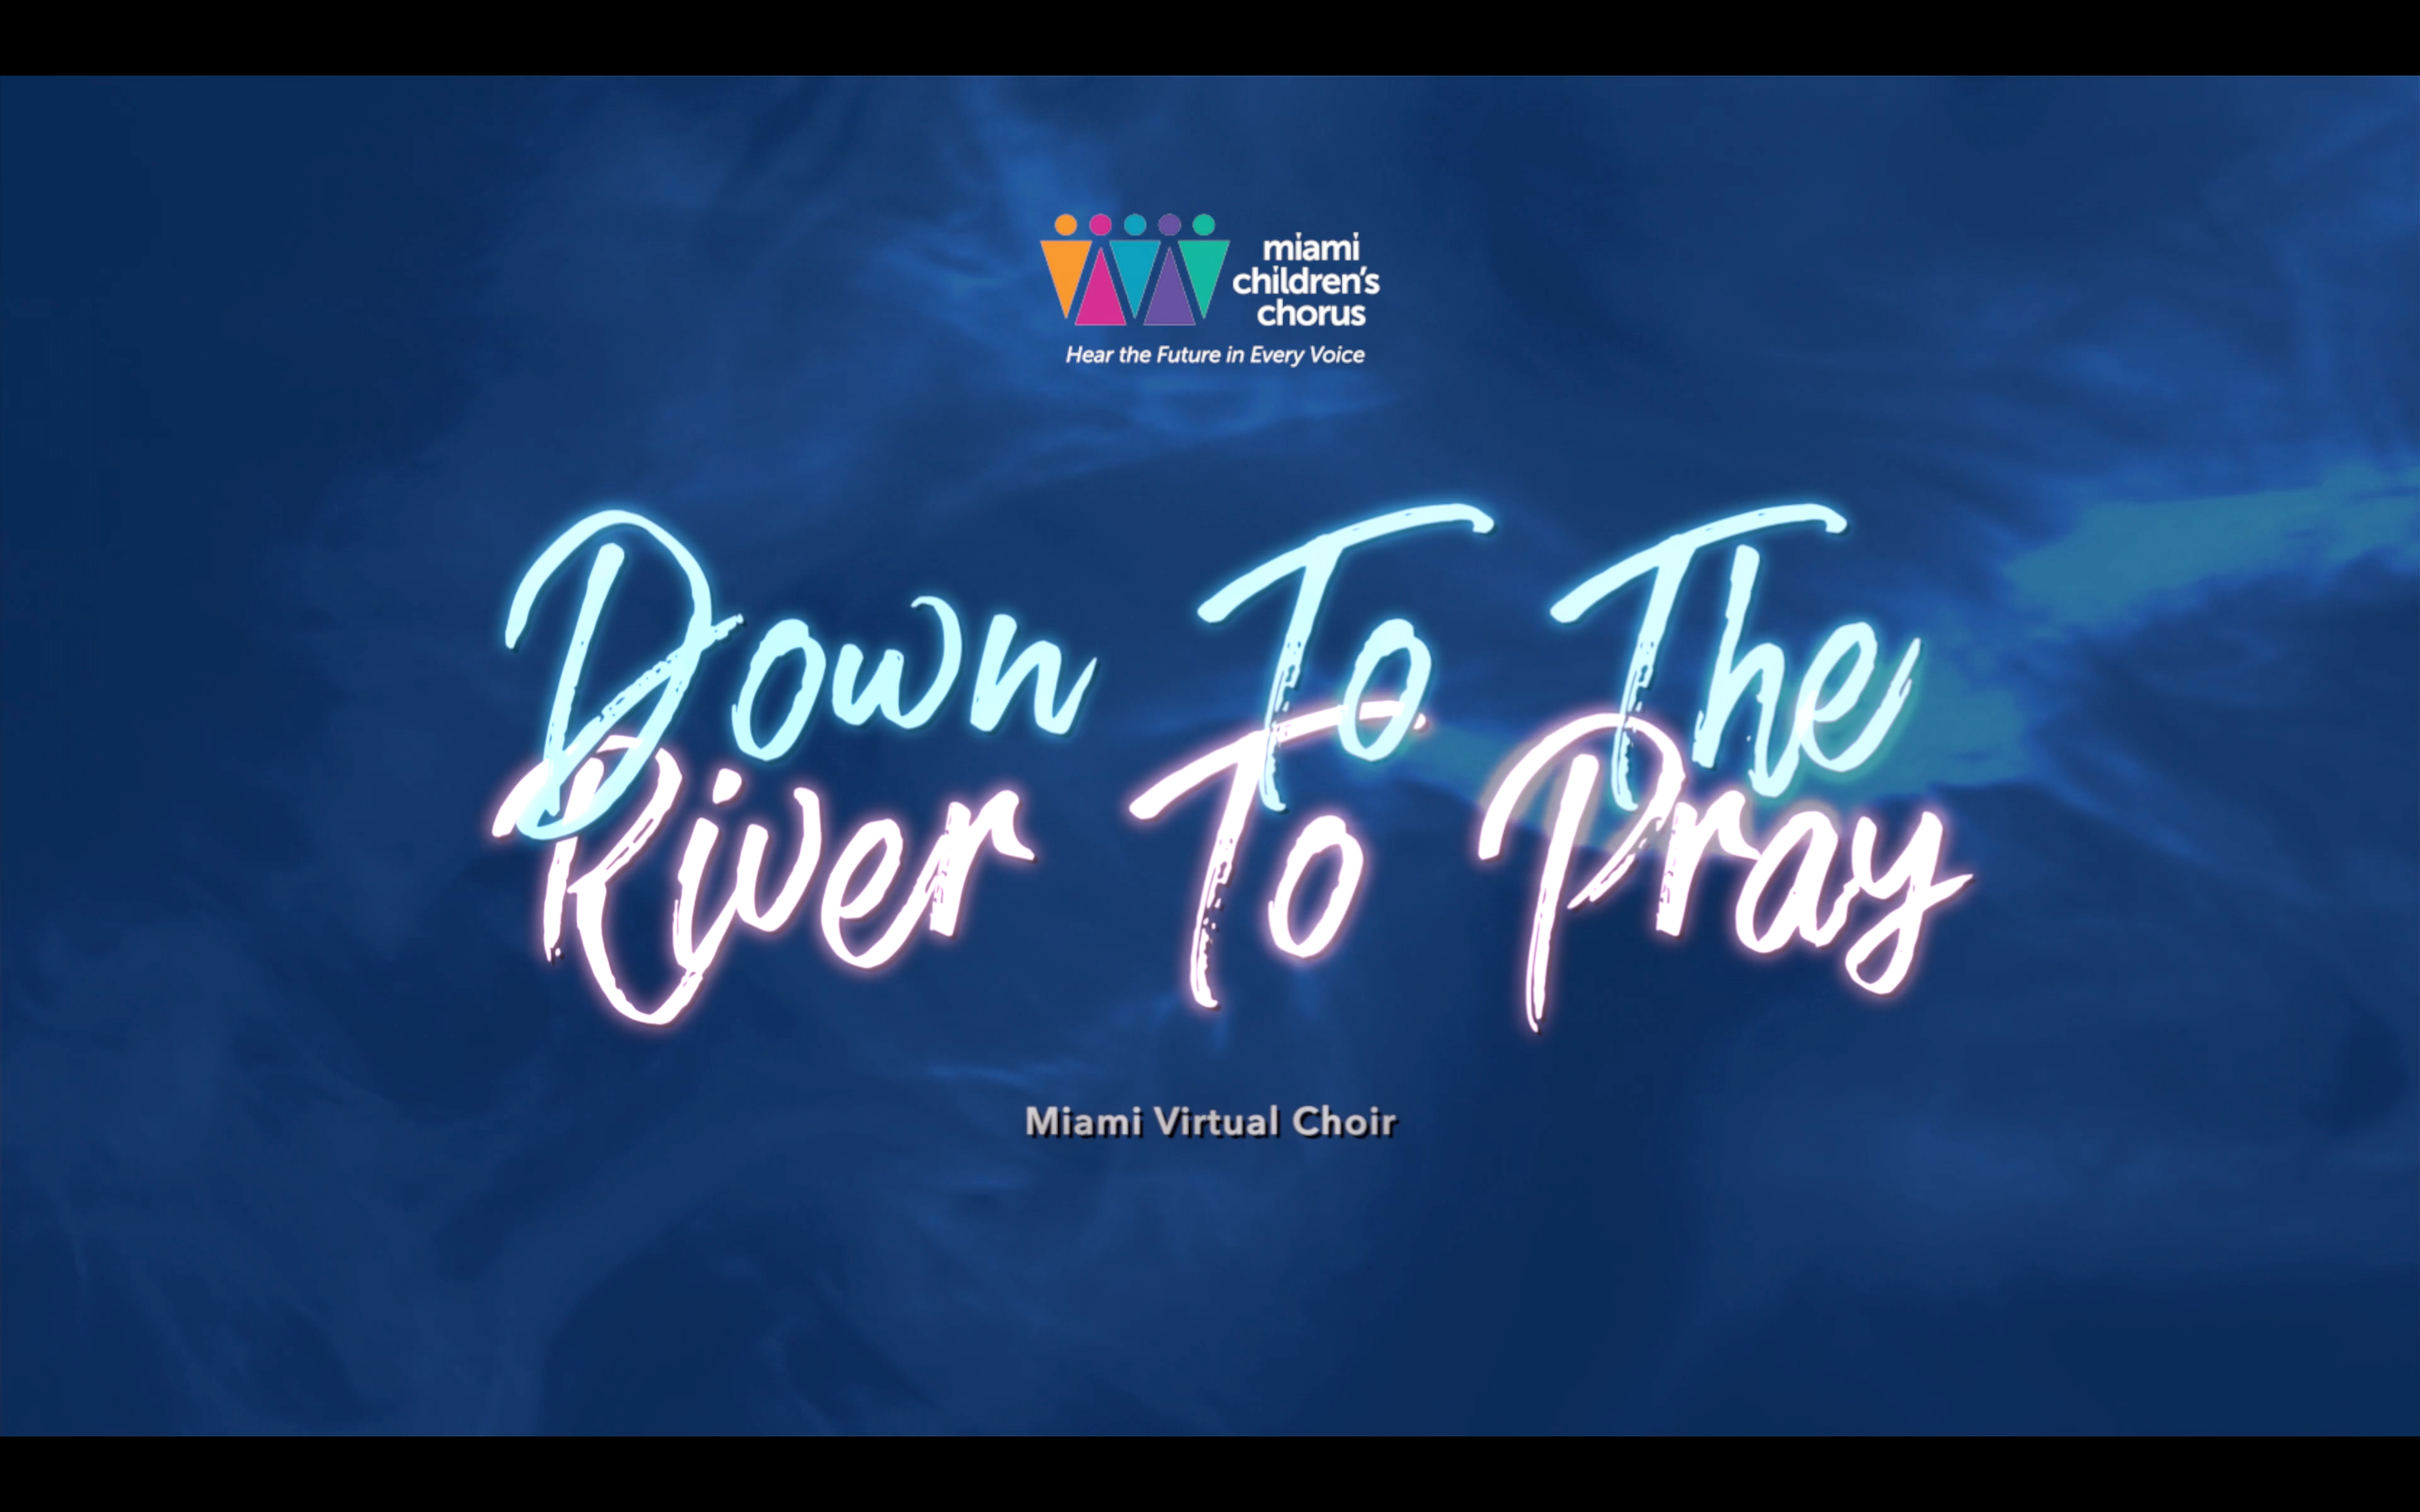 Miami Virtual Choir - Down To The River to Pray